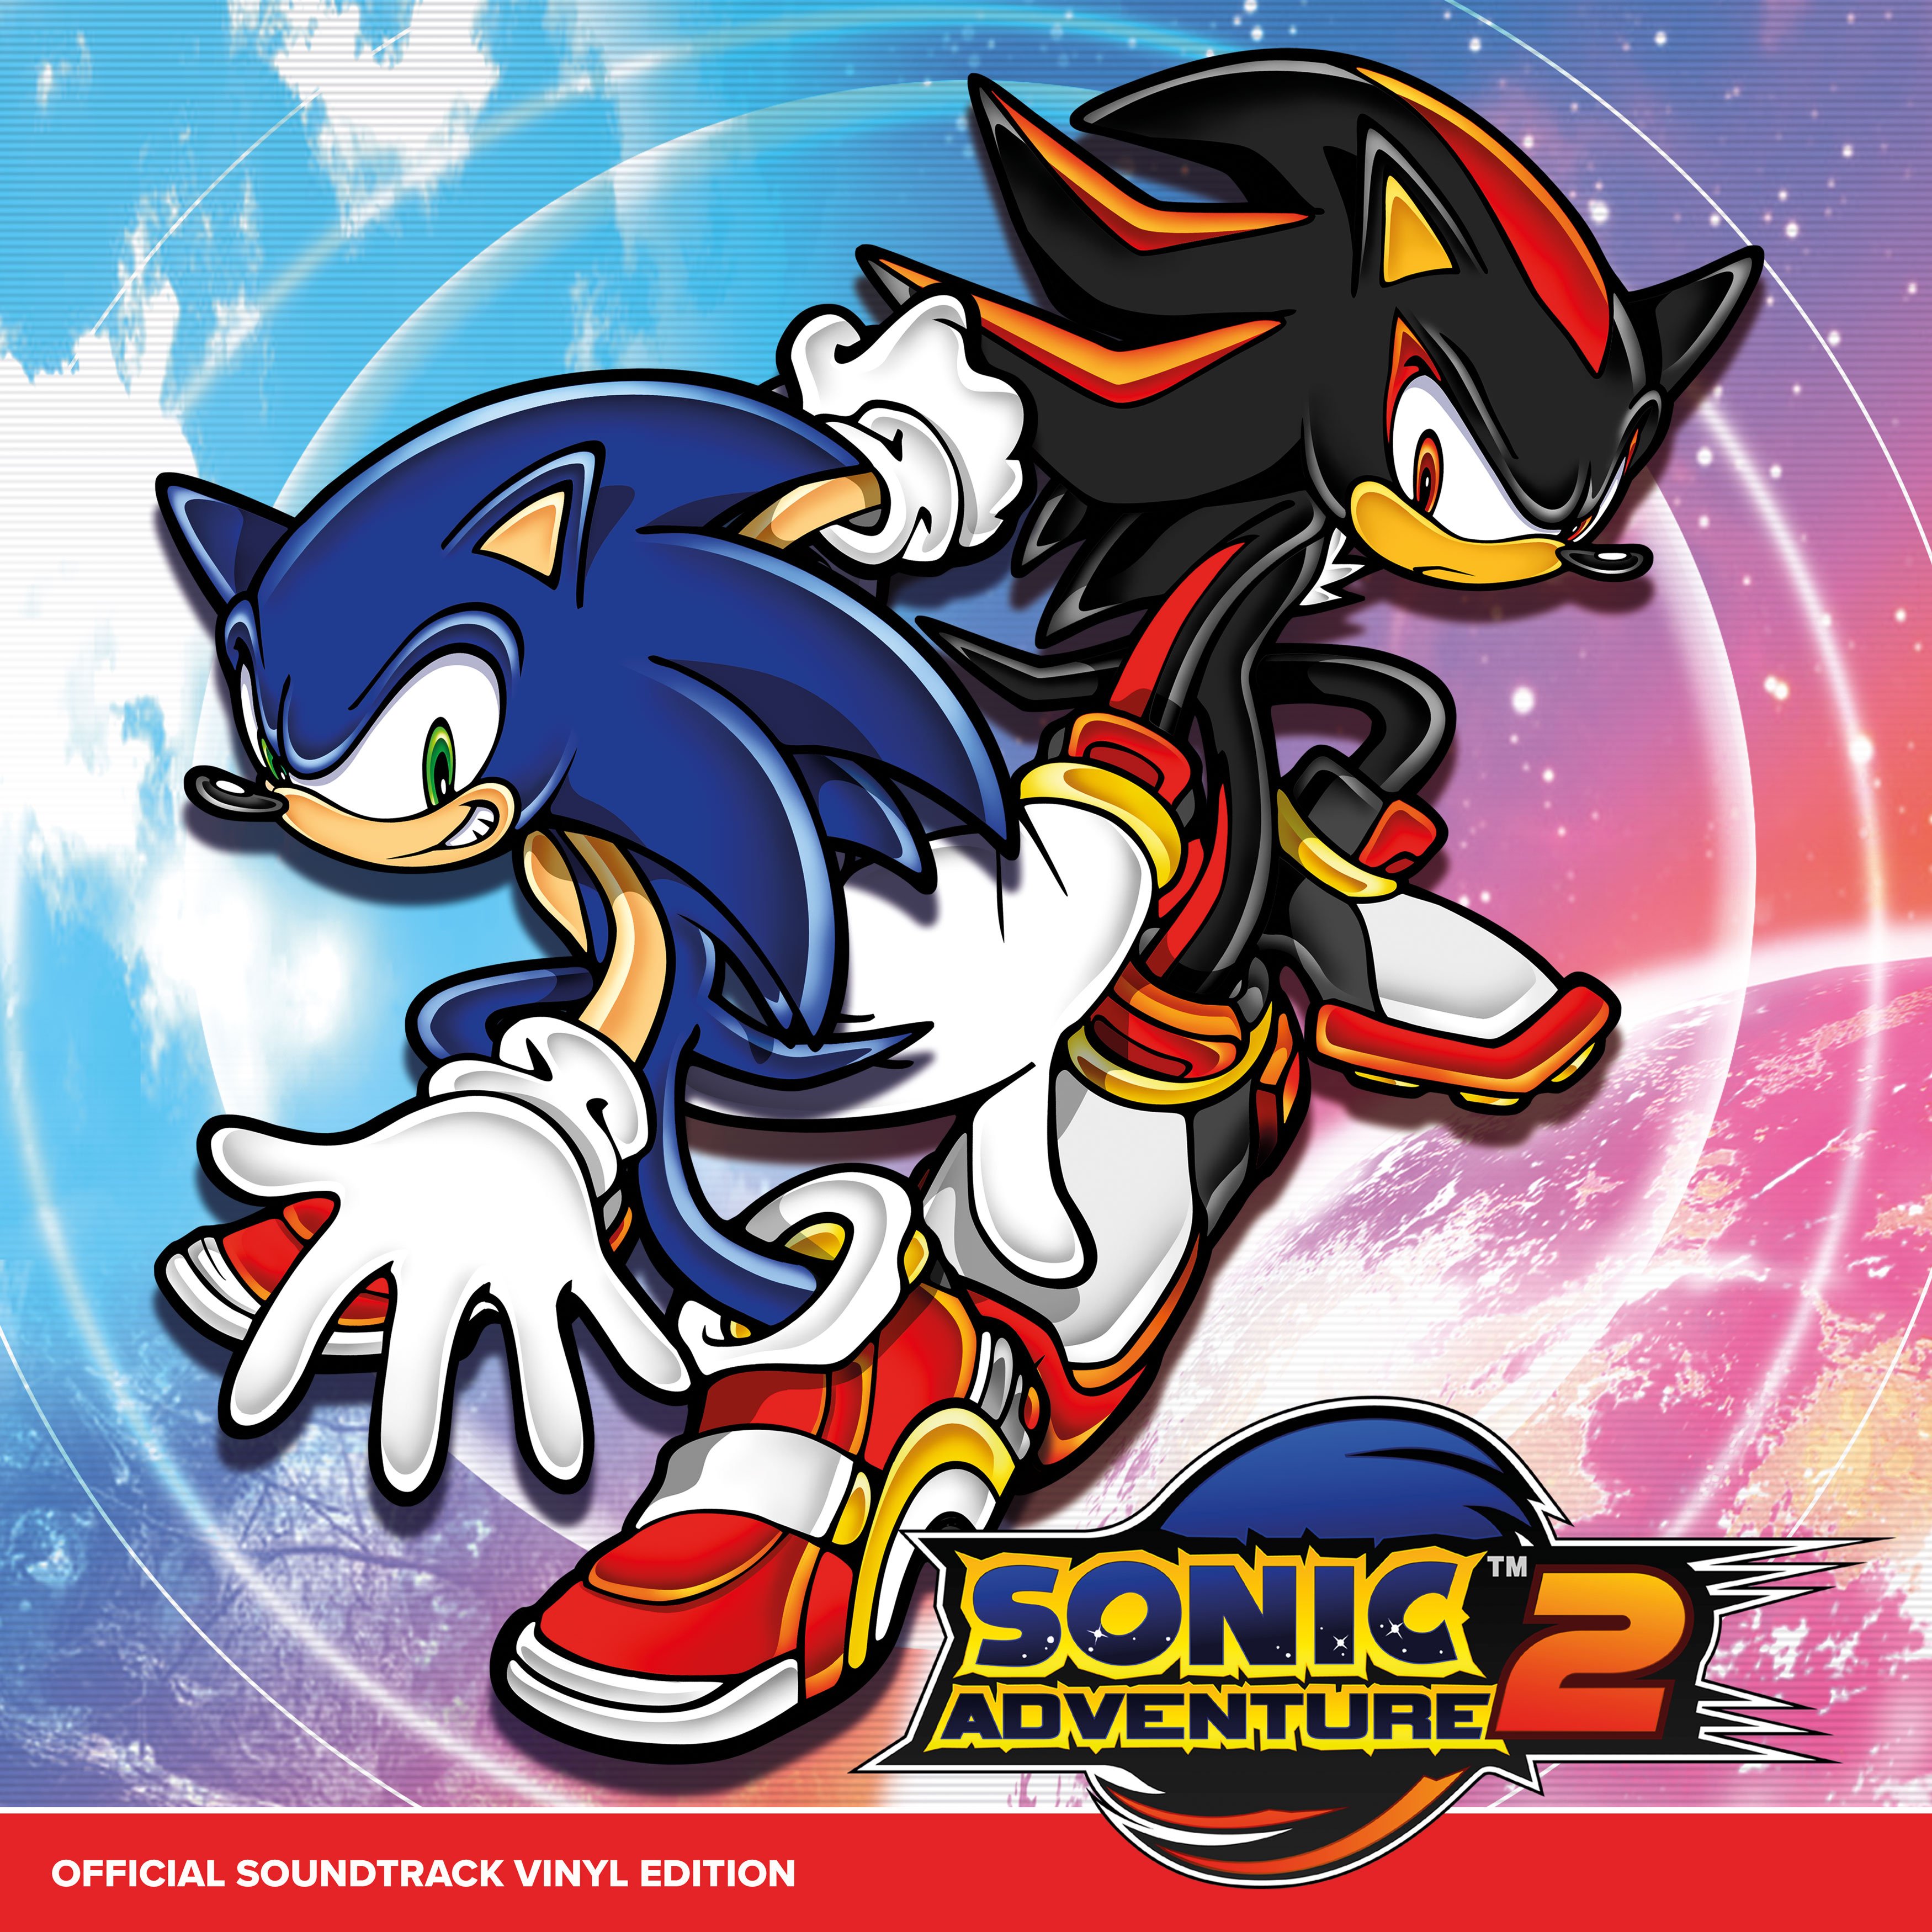 Live and learn sonic. Соник адвенчер 2. Sonic Adventure 2 обложка. Sega Dreamcast Sonic Adventure 2. Sonic Adventure 2 Original Soundtrack.